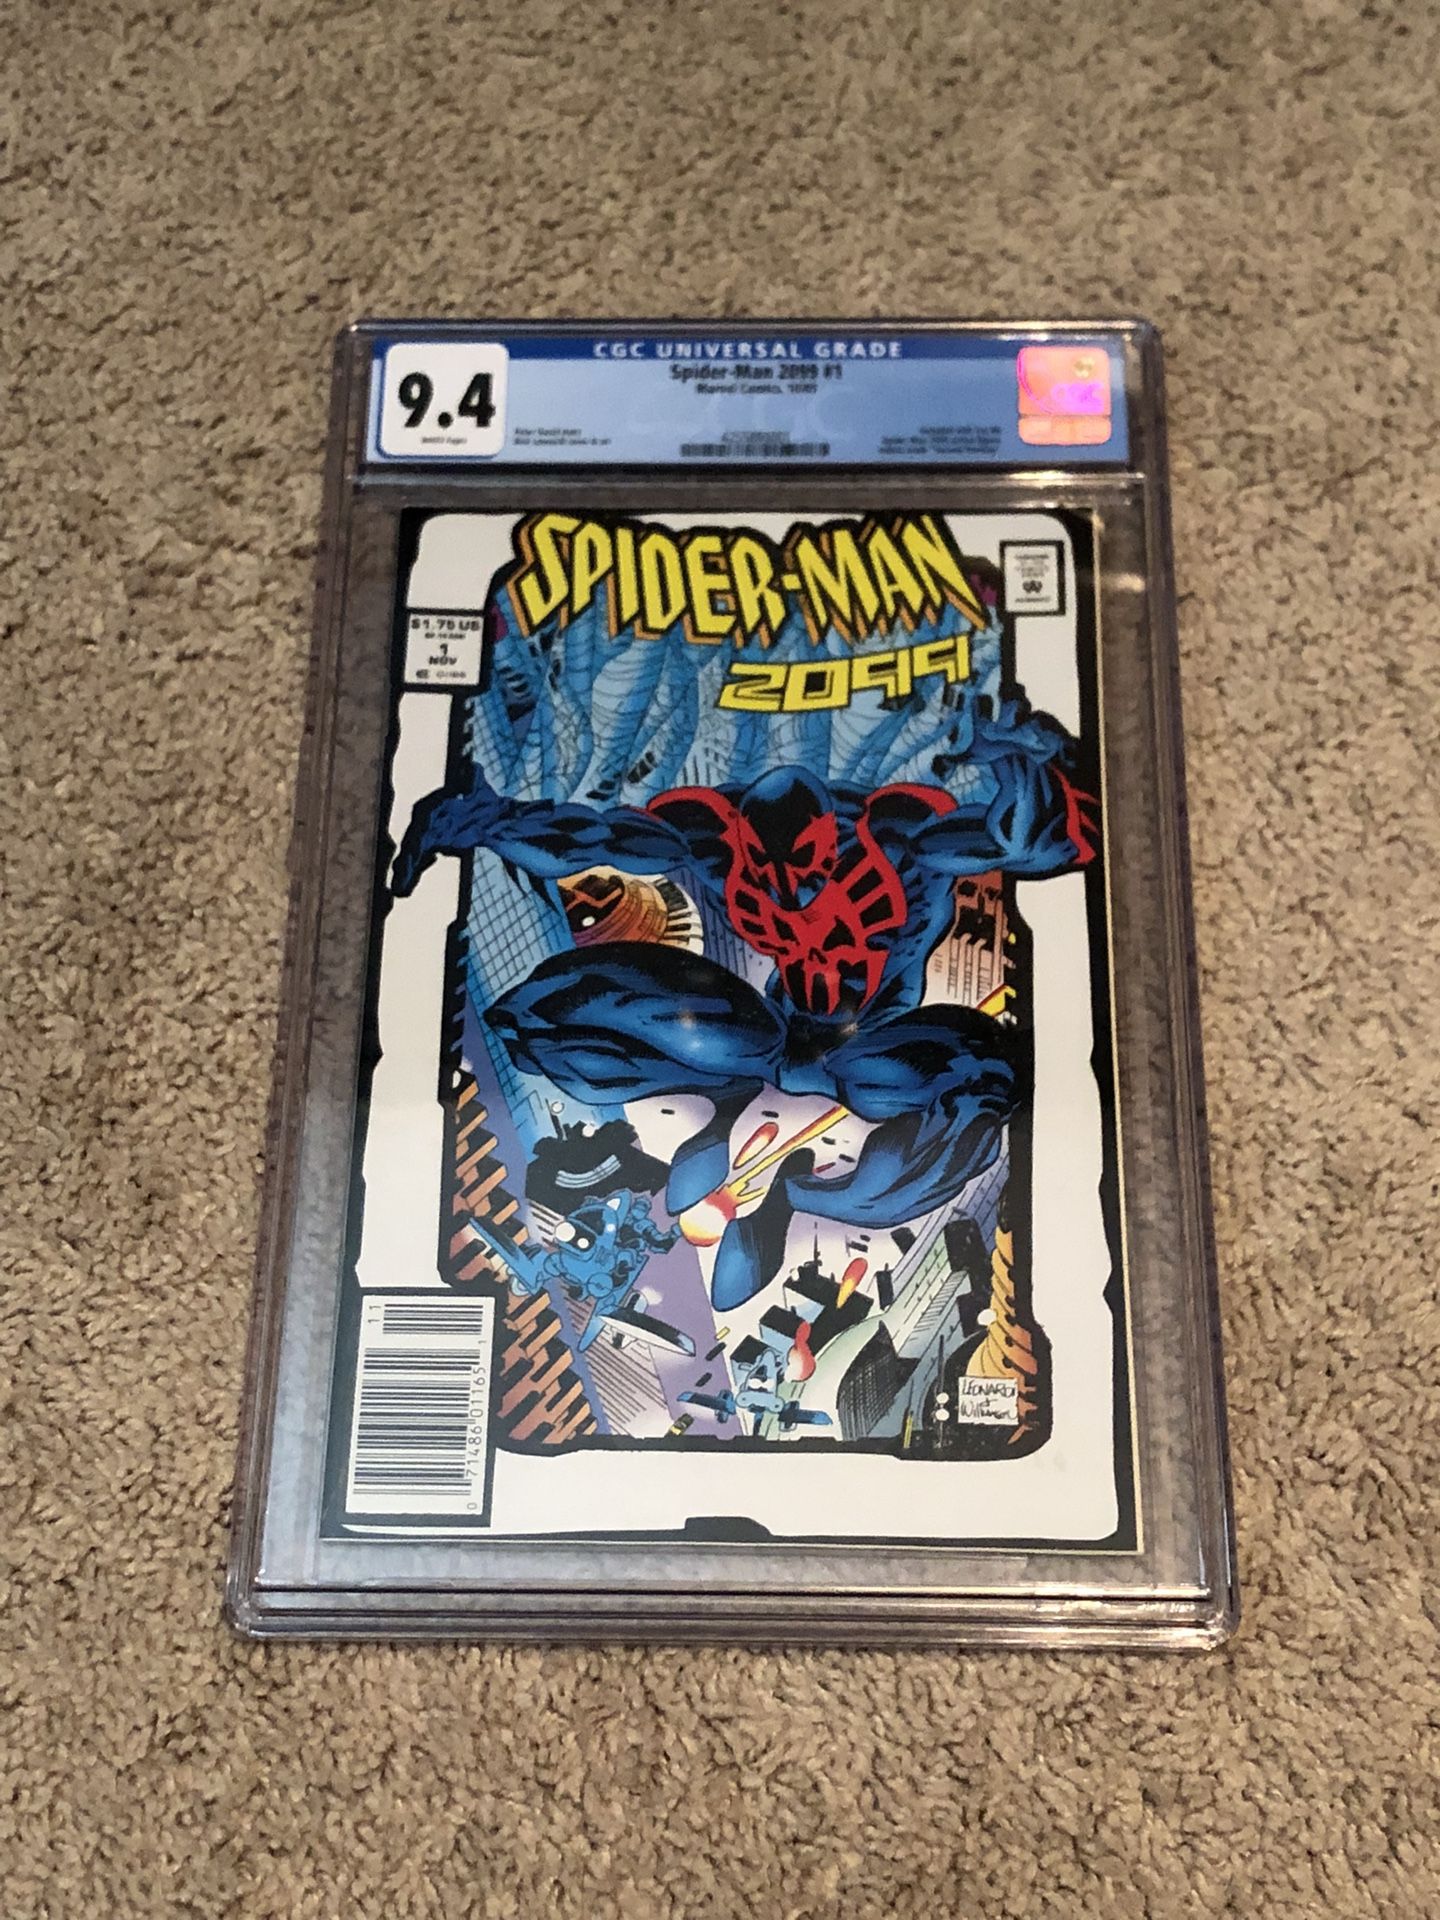 Spider-Man 2099 #1, HTF ToyBiz 2nd Print CGC 9.4 Near Mint